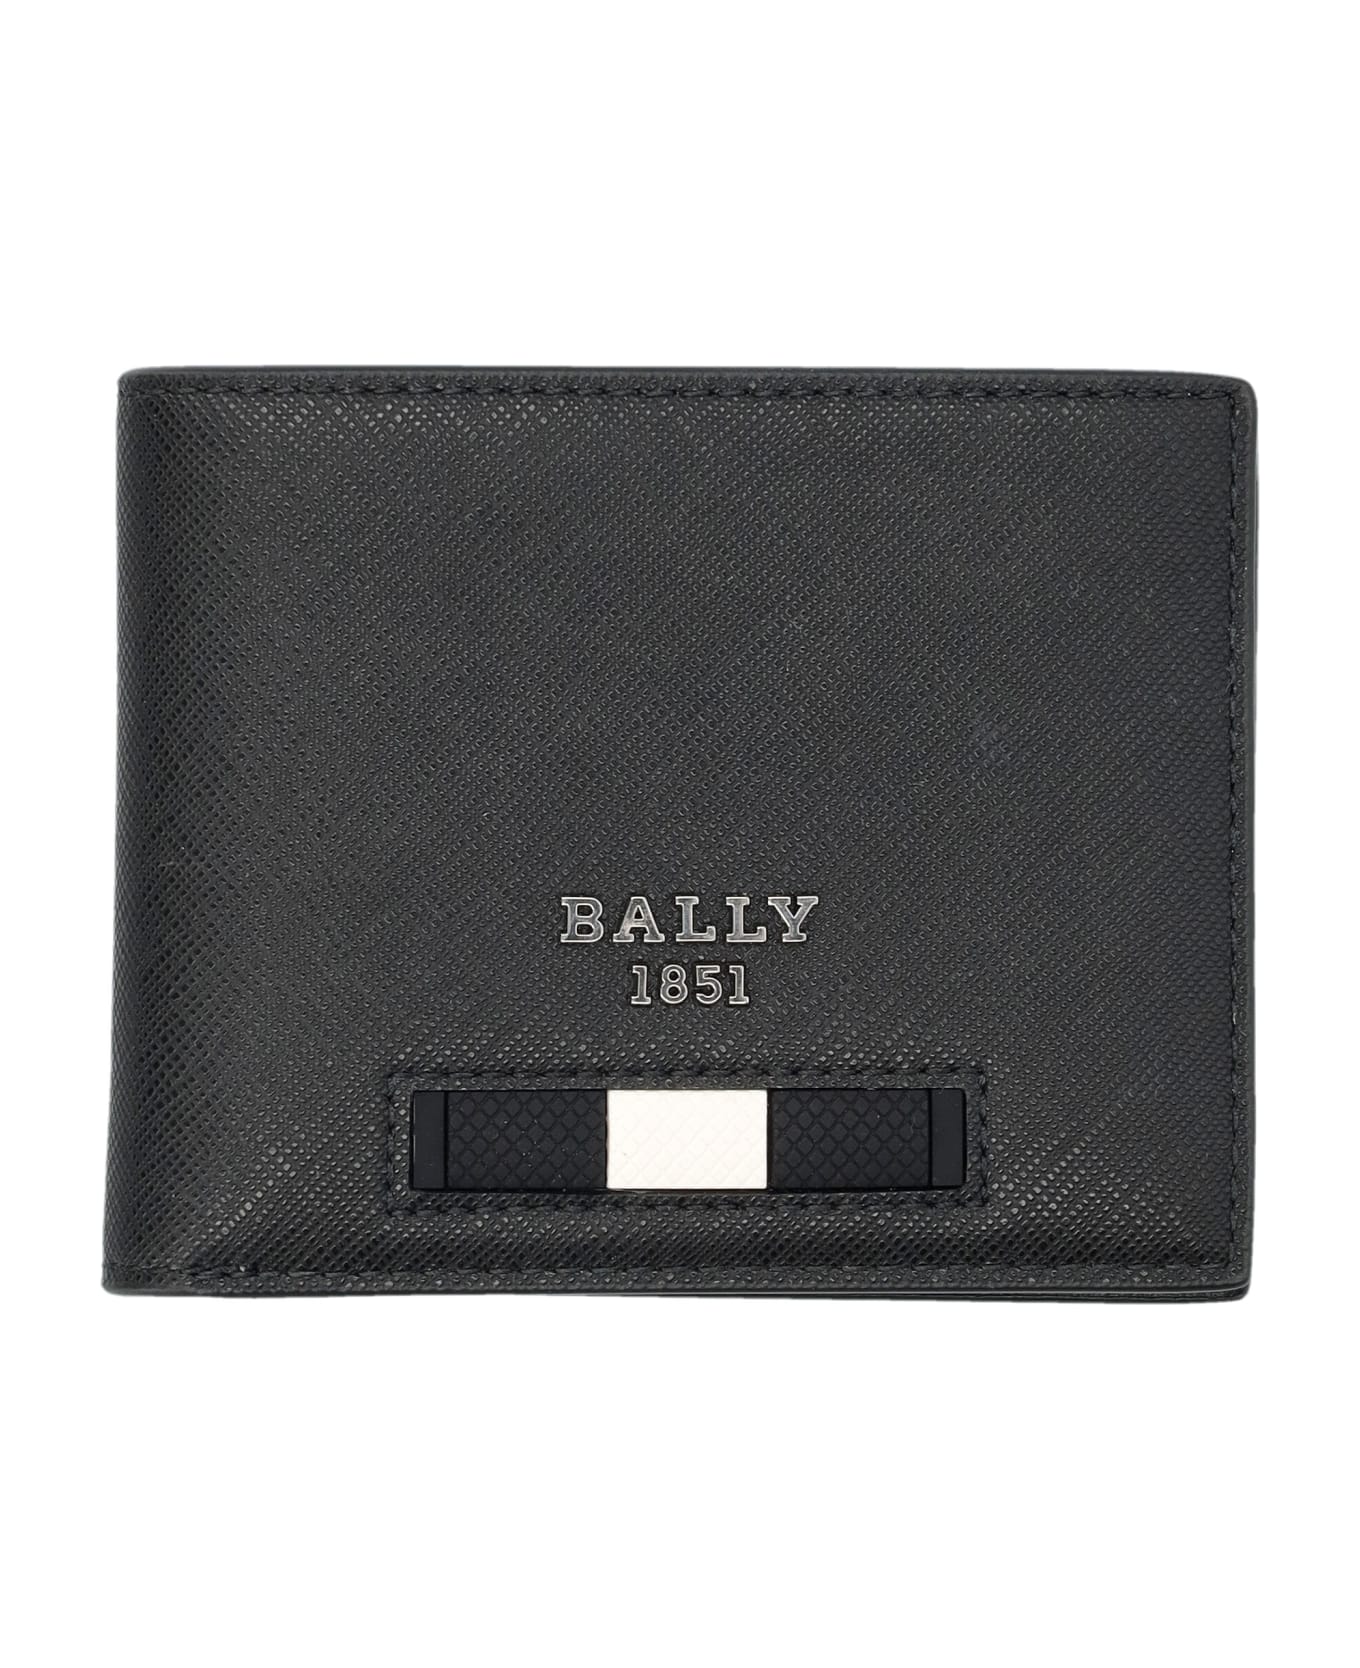 Bally Bevye Wallet - BLACK